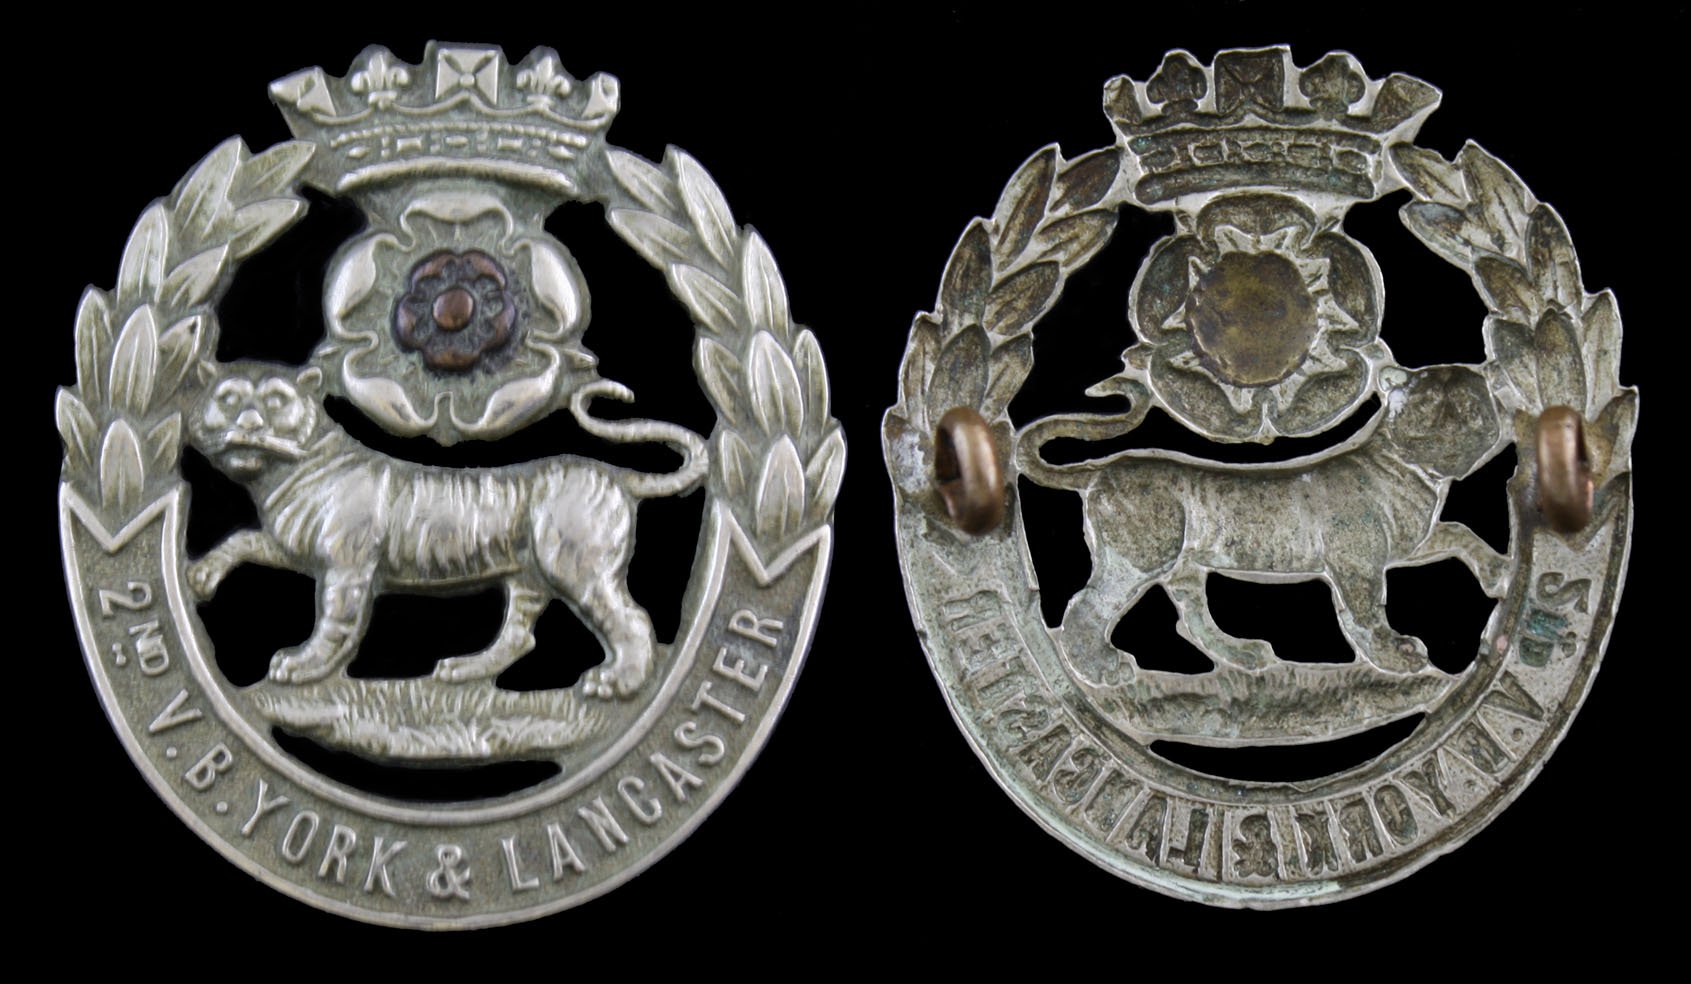 2nd Volunteer Battalion Badge 1897 to 1908-2nd pattern